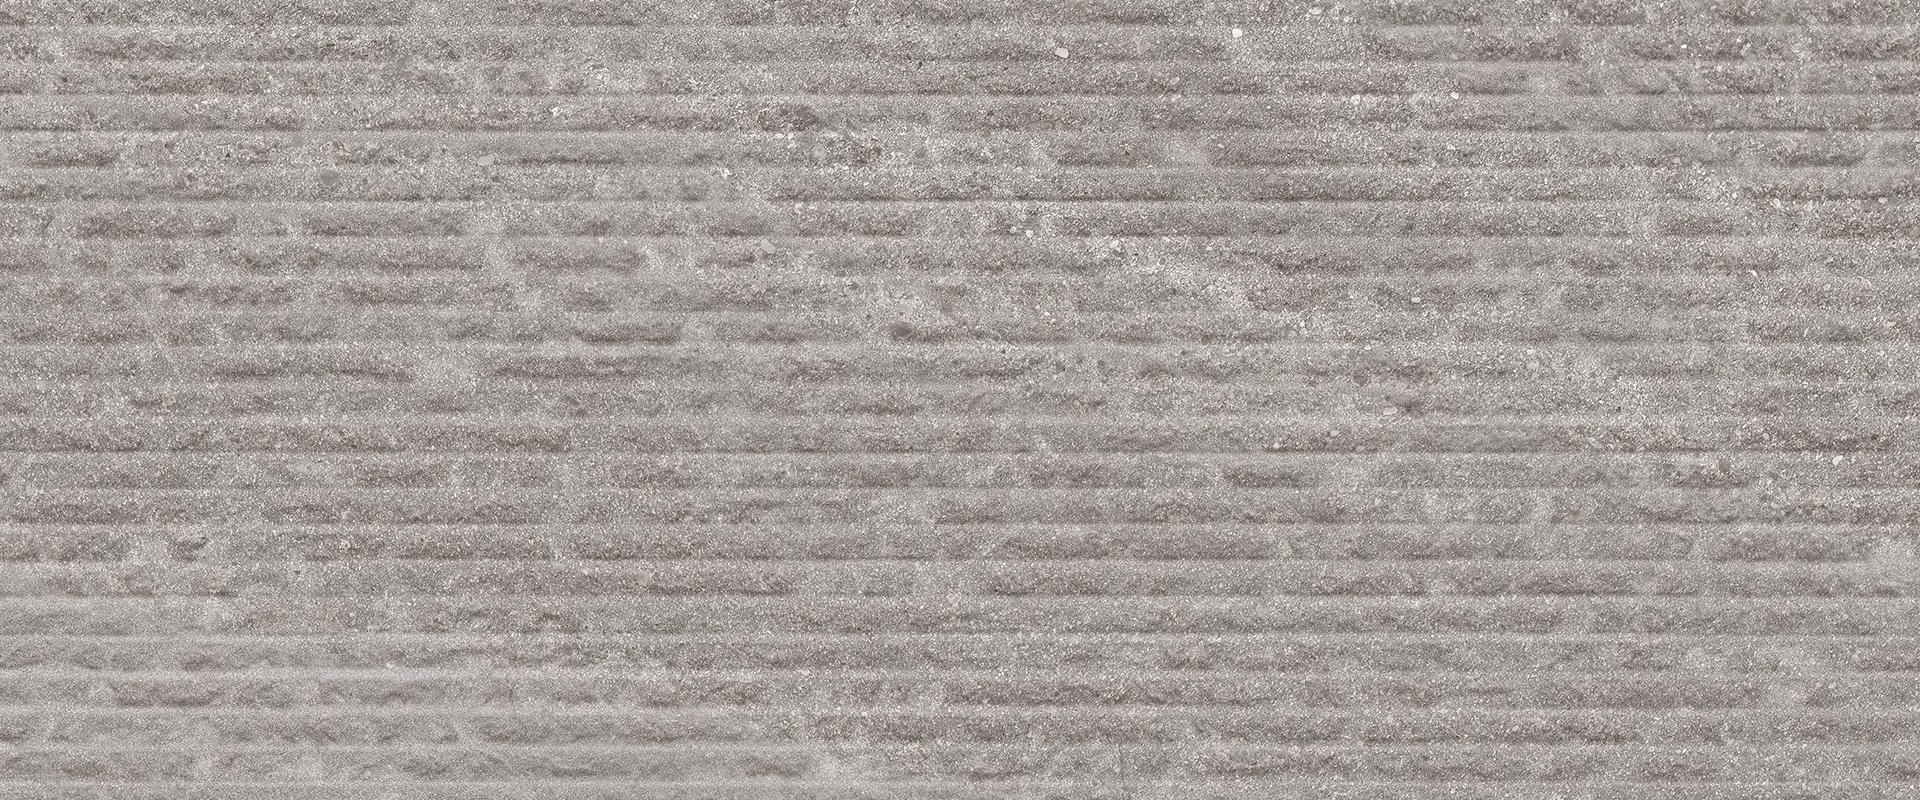 12 x 24 Stonehenge Grey DECO Rectified Porcelain tile 